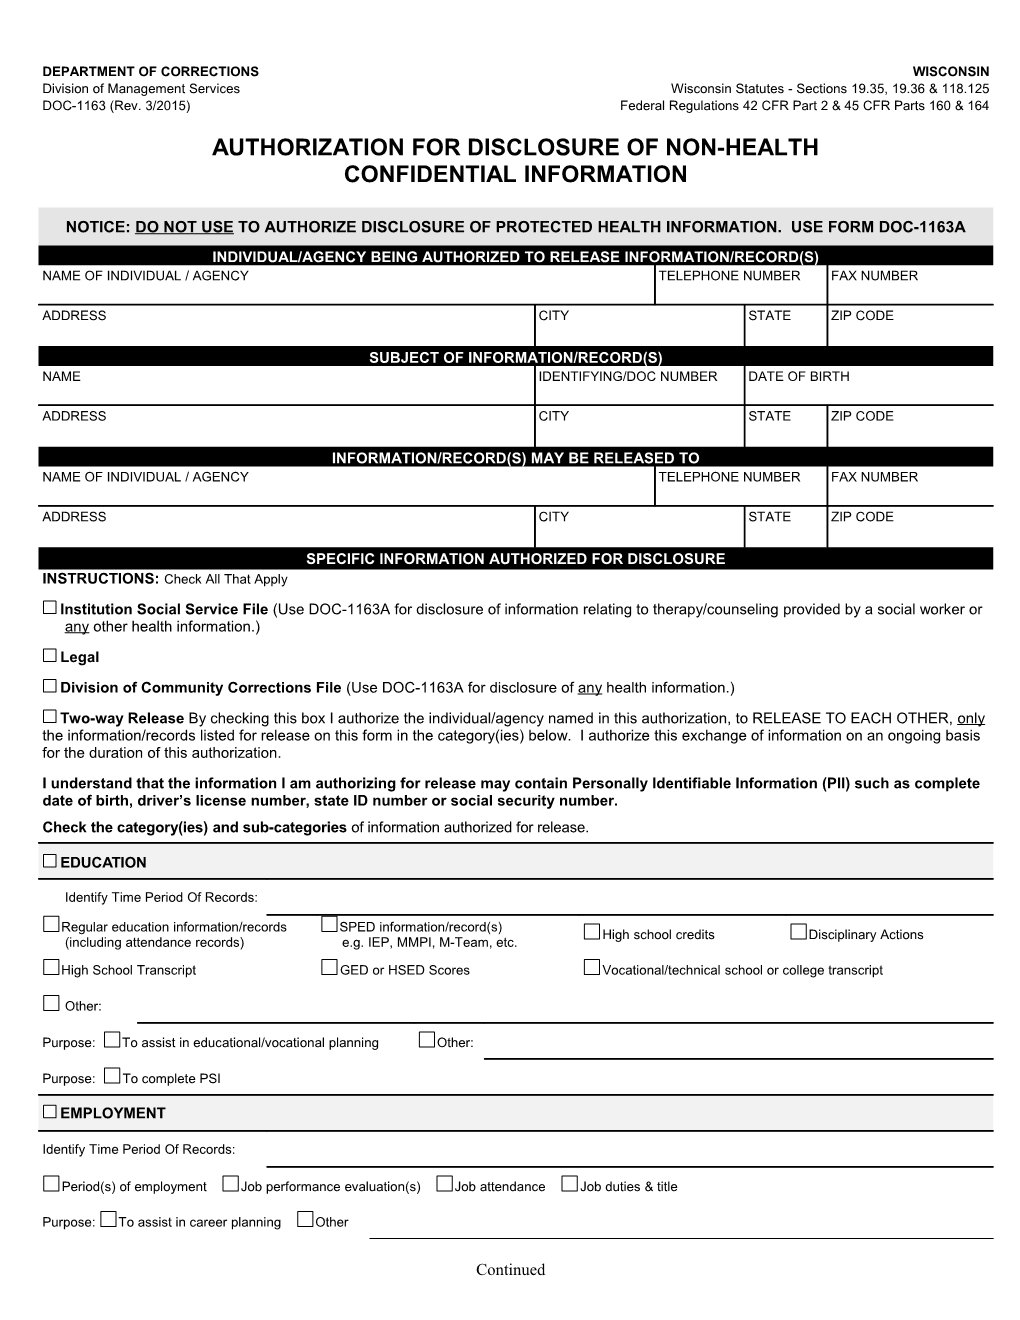 DOC-1163 Authorization for Disclosure of Non-Health Confidential Info